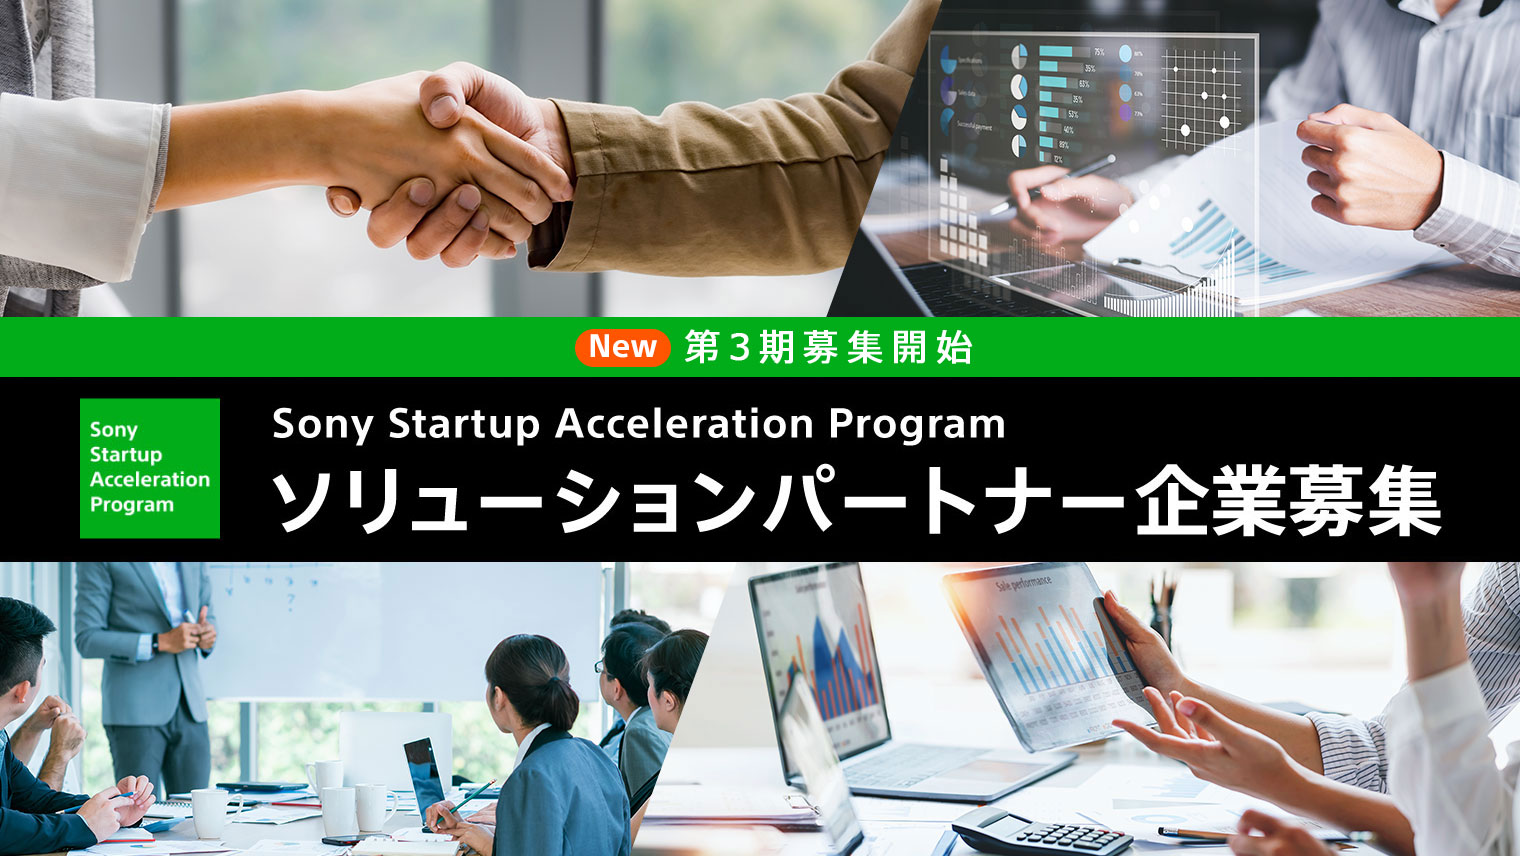 Sony Startup Acceleration Program ソリューションパートナー募集